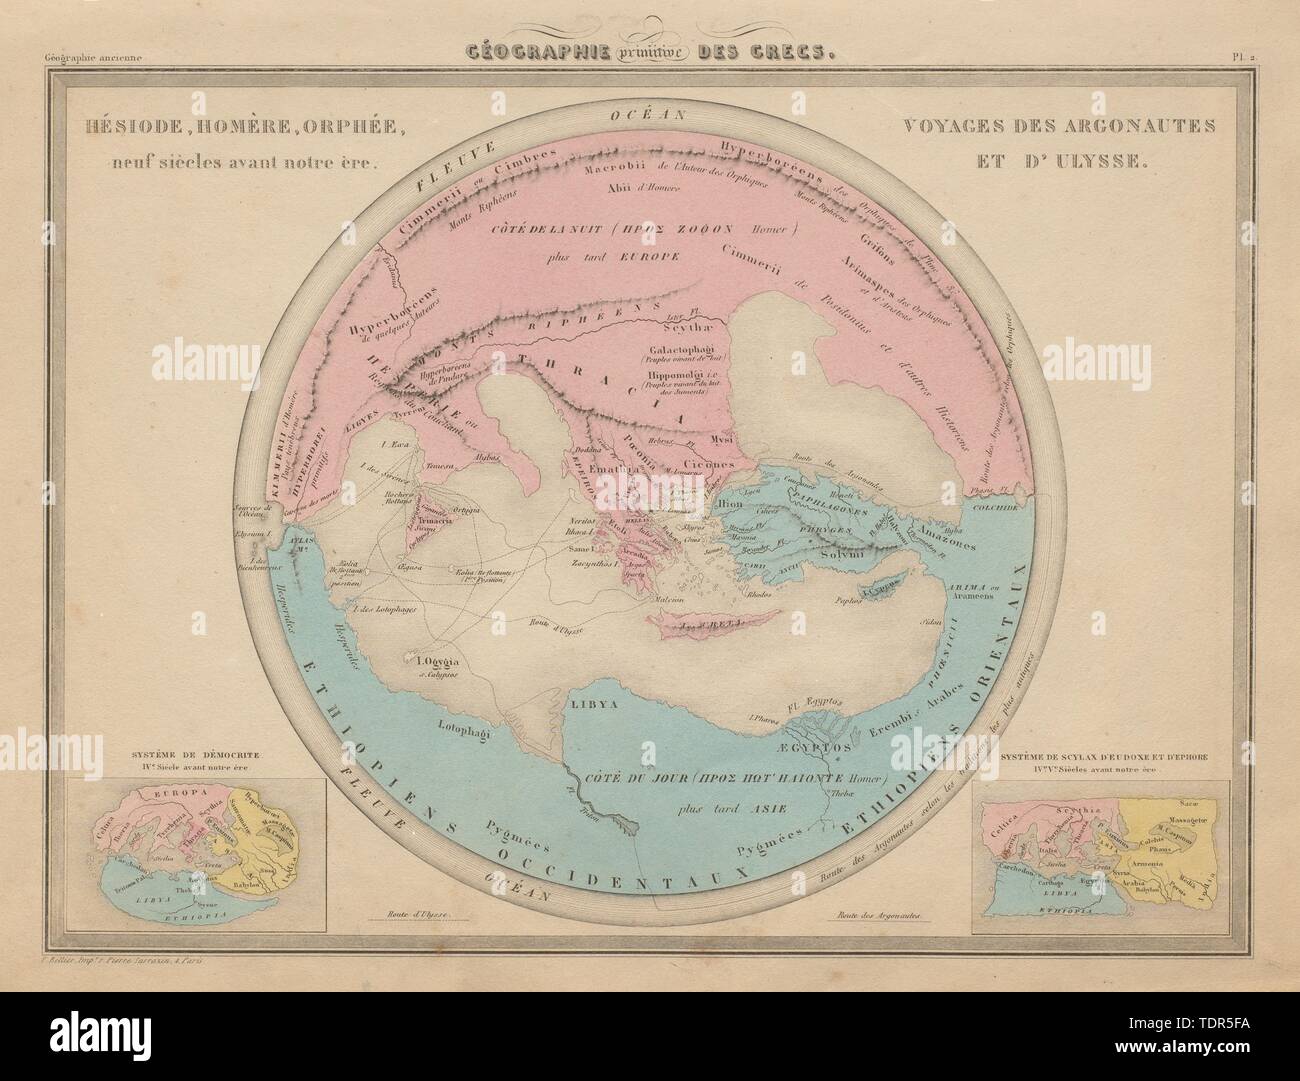 Ancient Greeks Hesiod Homer Orpheus world. Argonauts & Ulysses voyages c1871 map Stock Photo